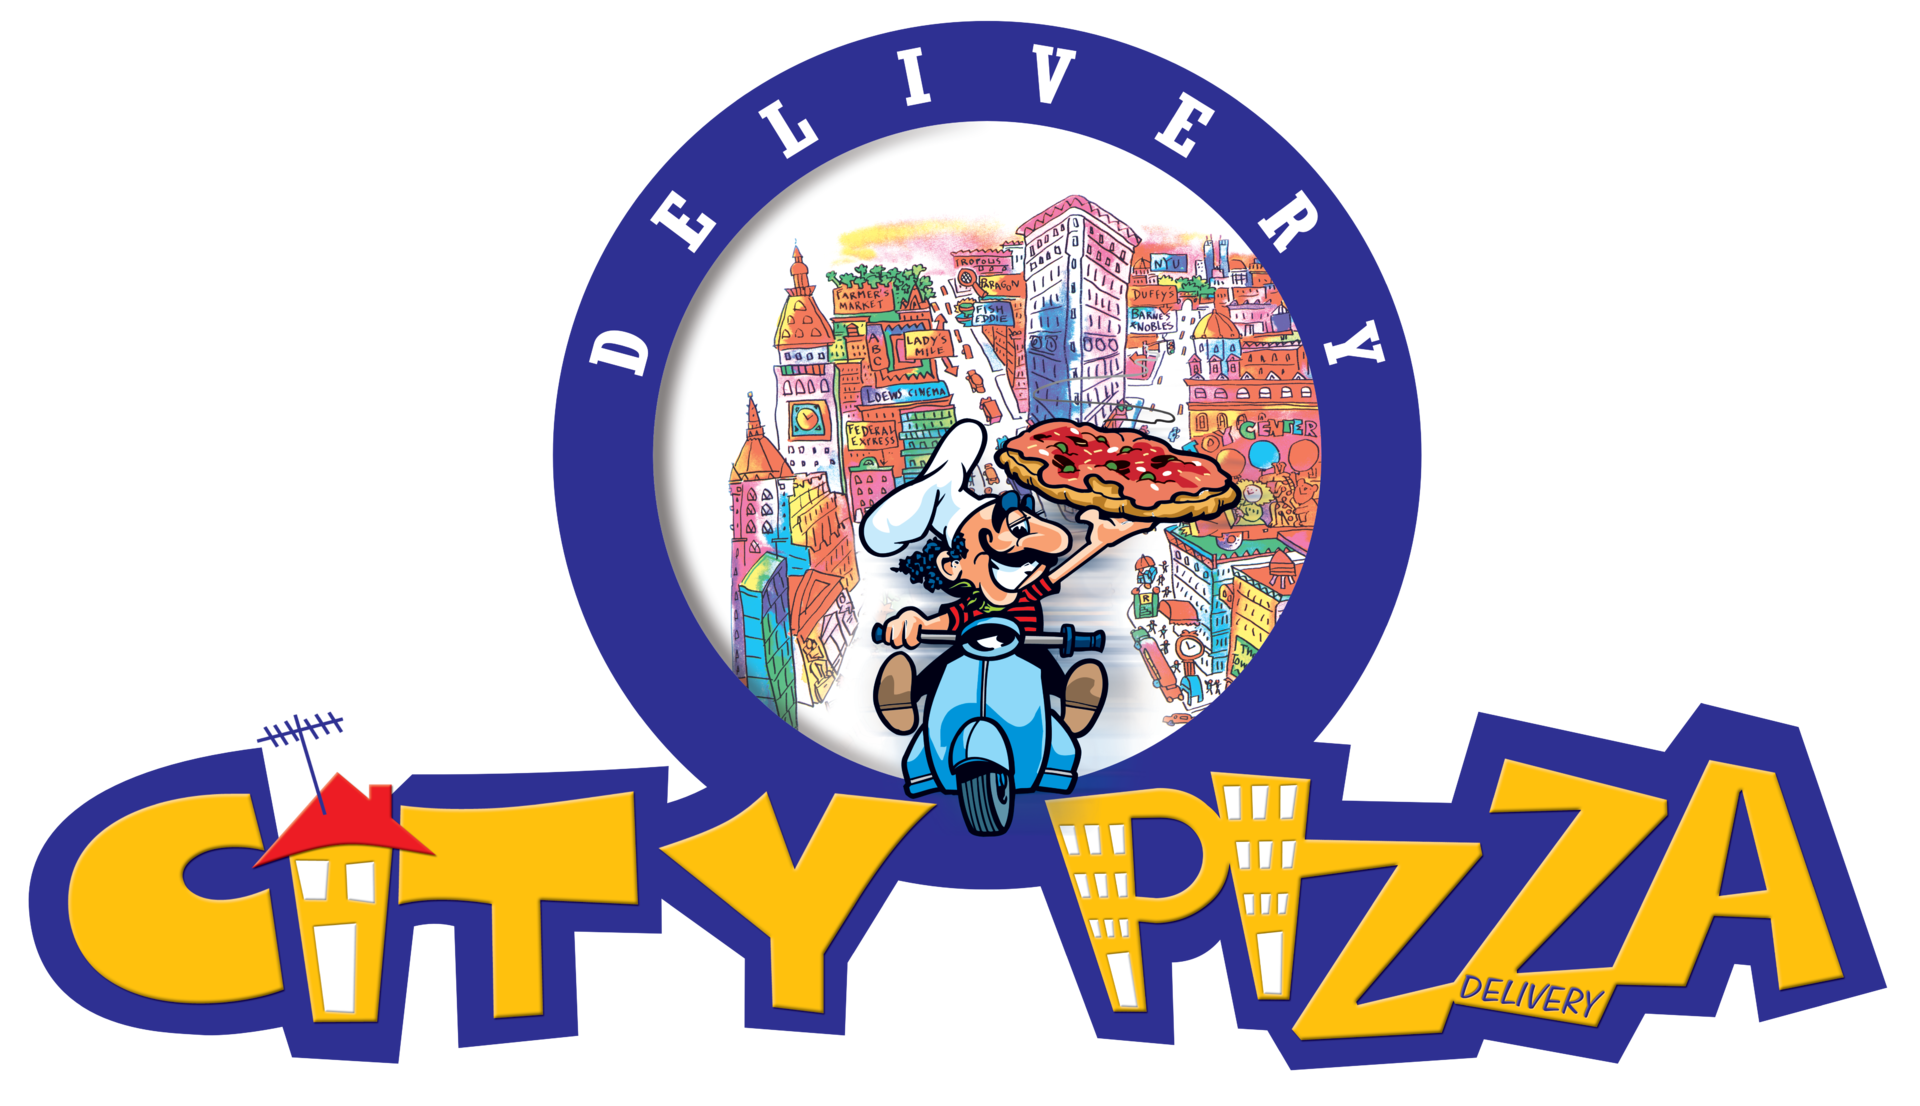 CITY PIZZA